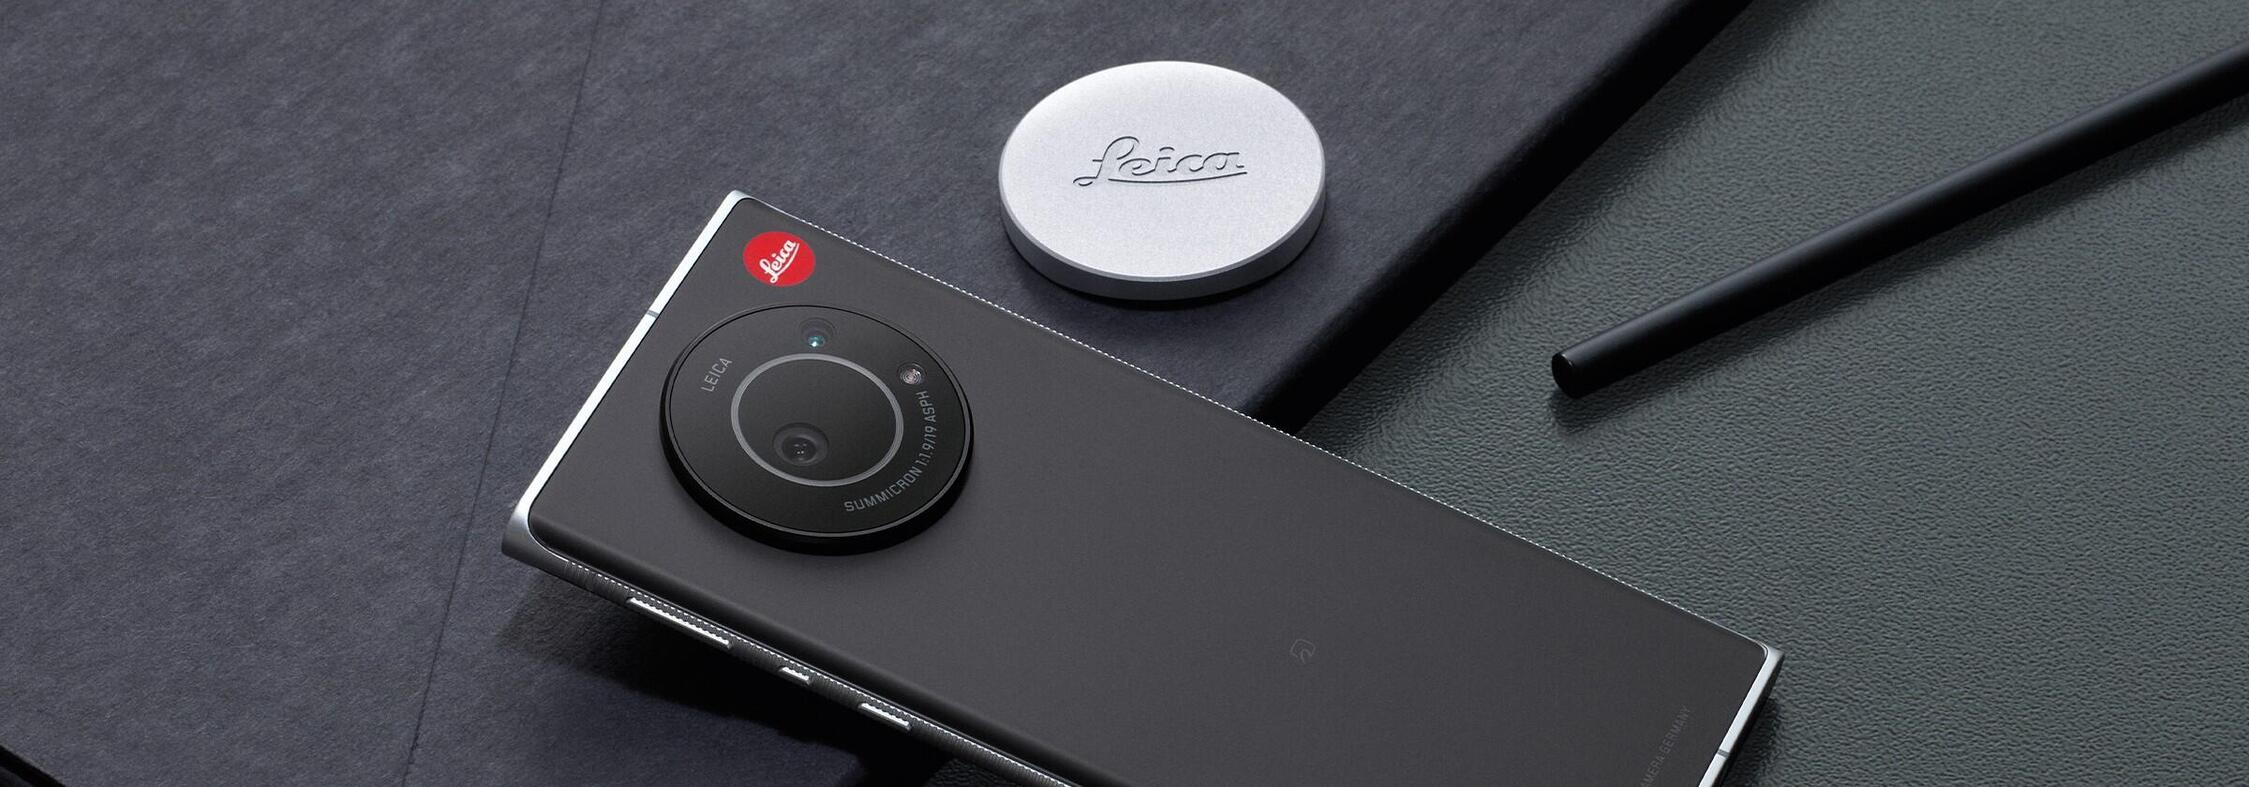 Leitz Phone 1 | Leica Camera MY